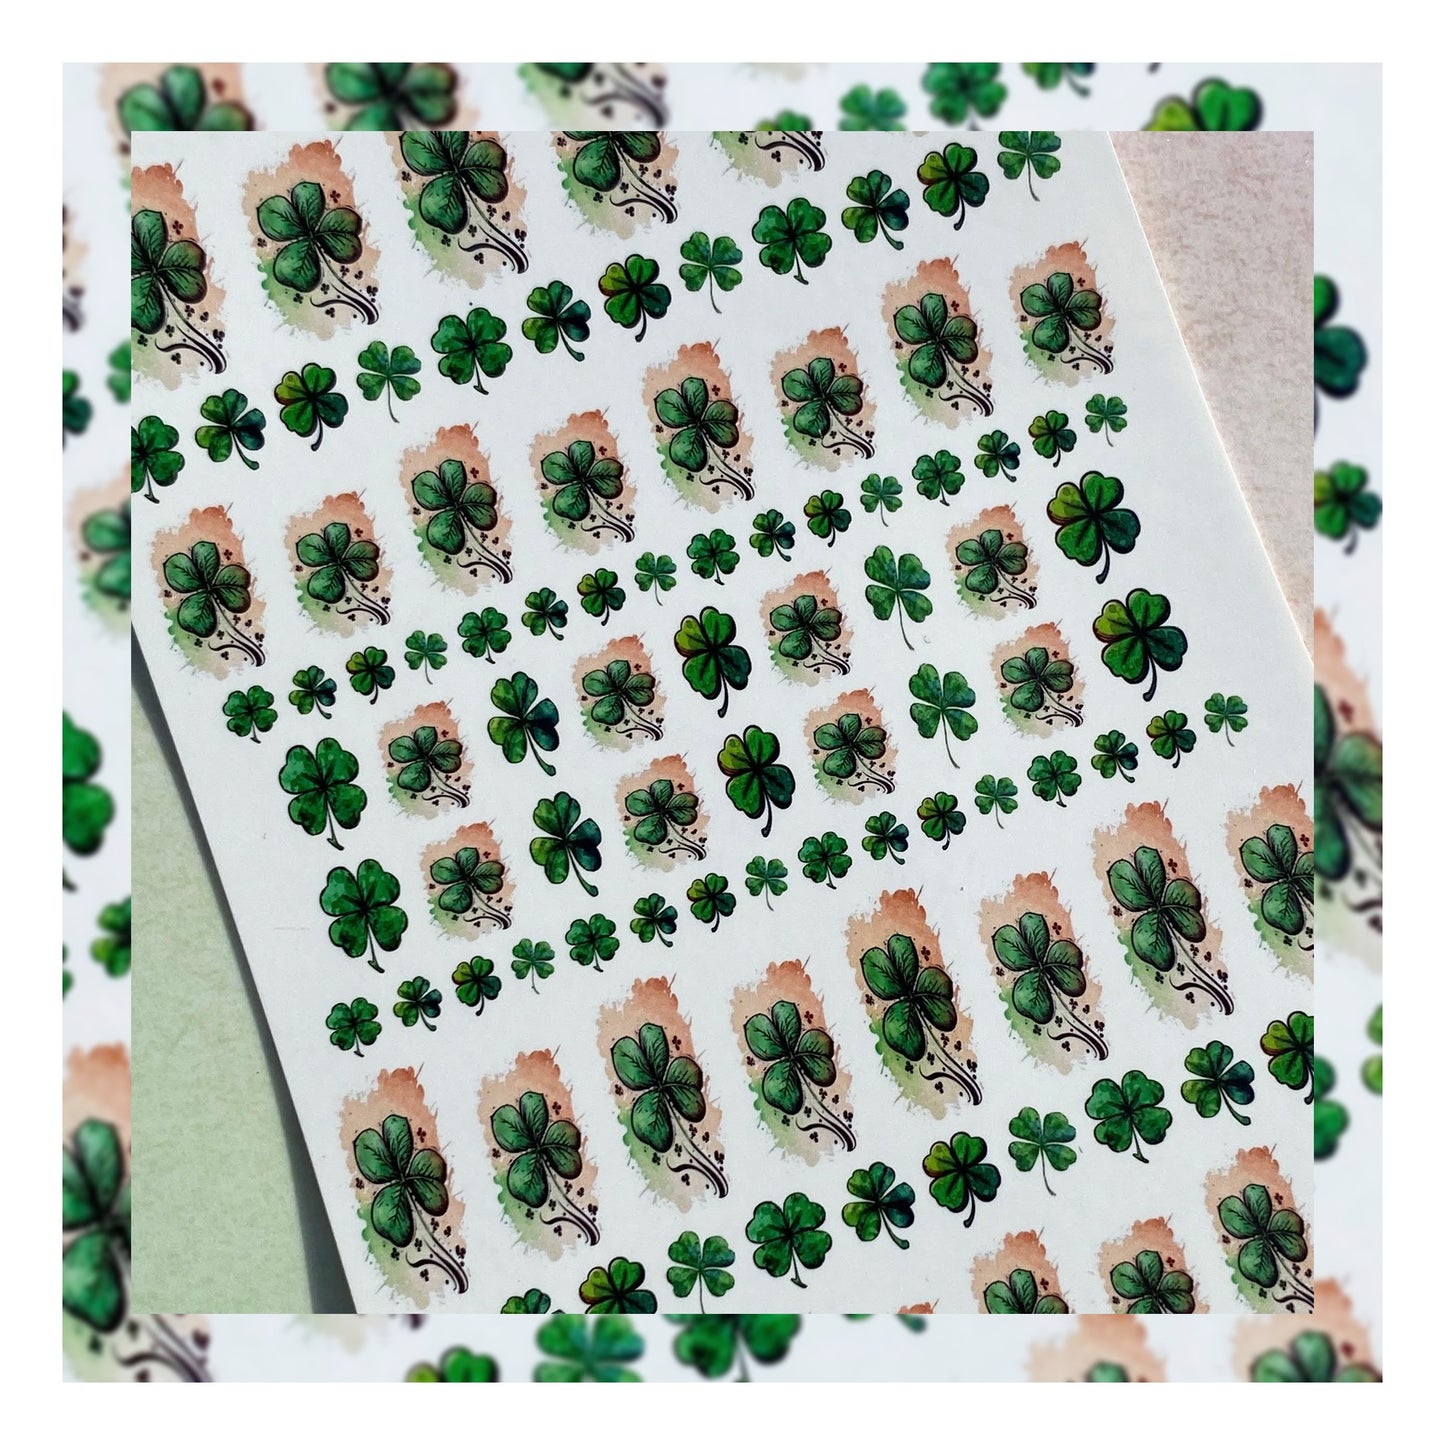 St. Patrick's Day Nail Art - Lucky Clover